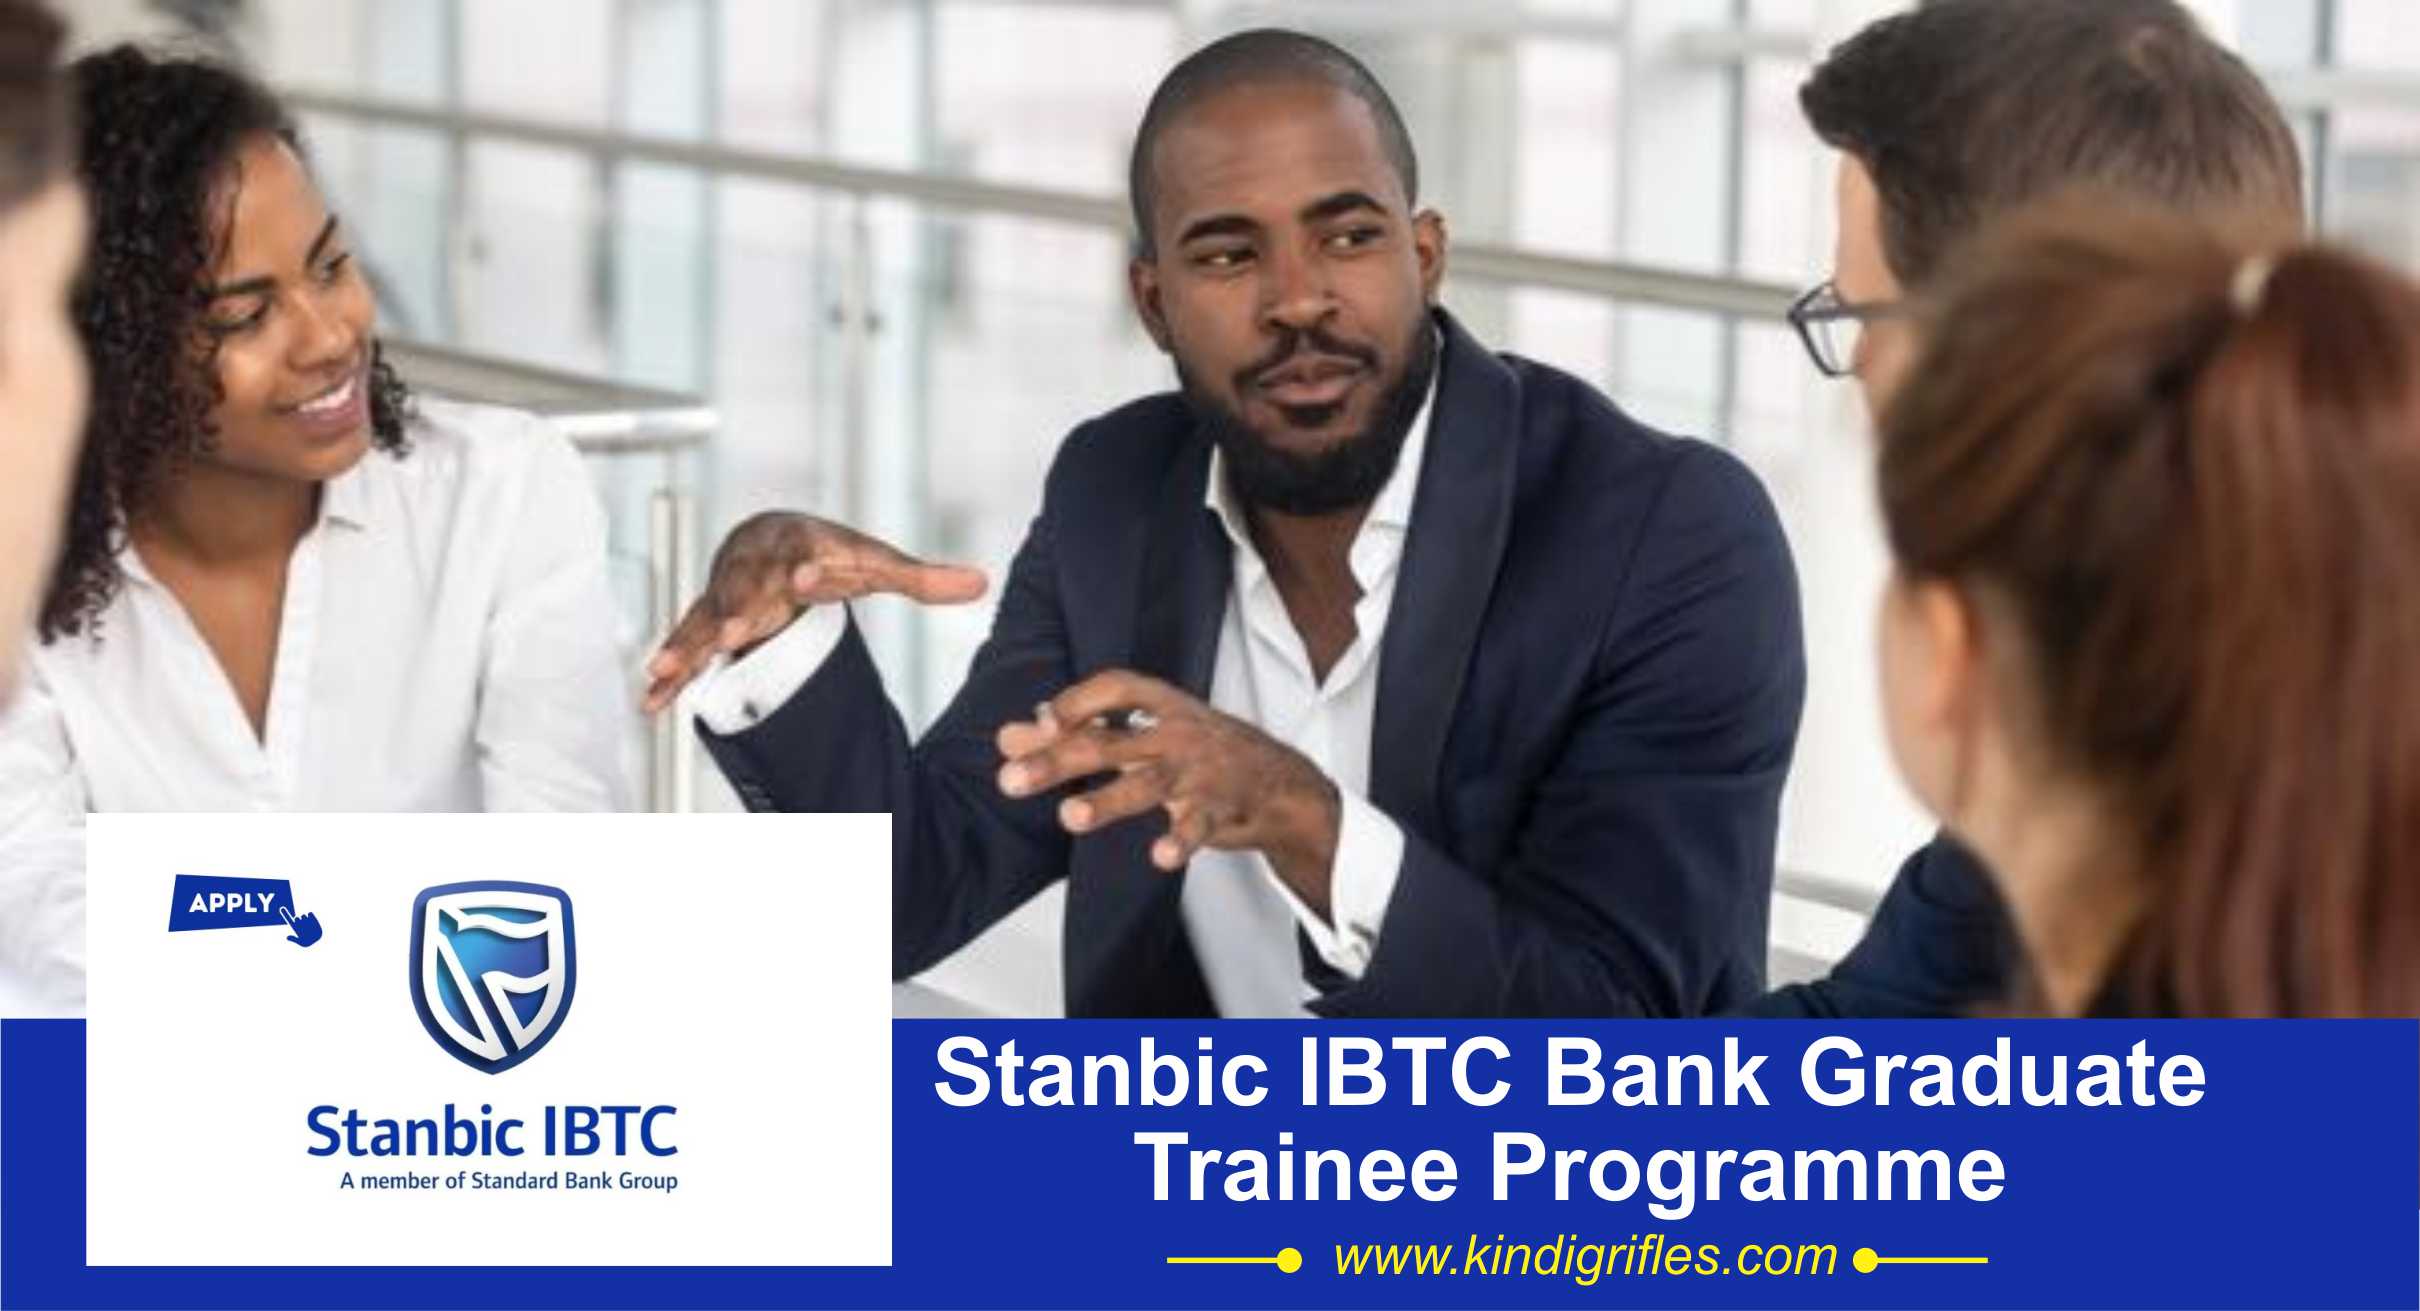 Stanbic IBTC Bank Graduate Trainee Programme